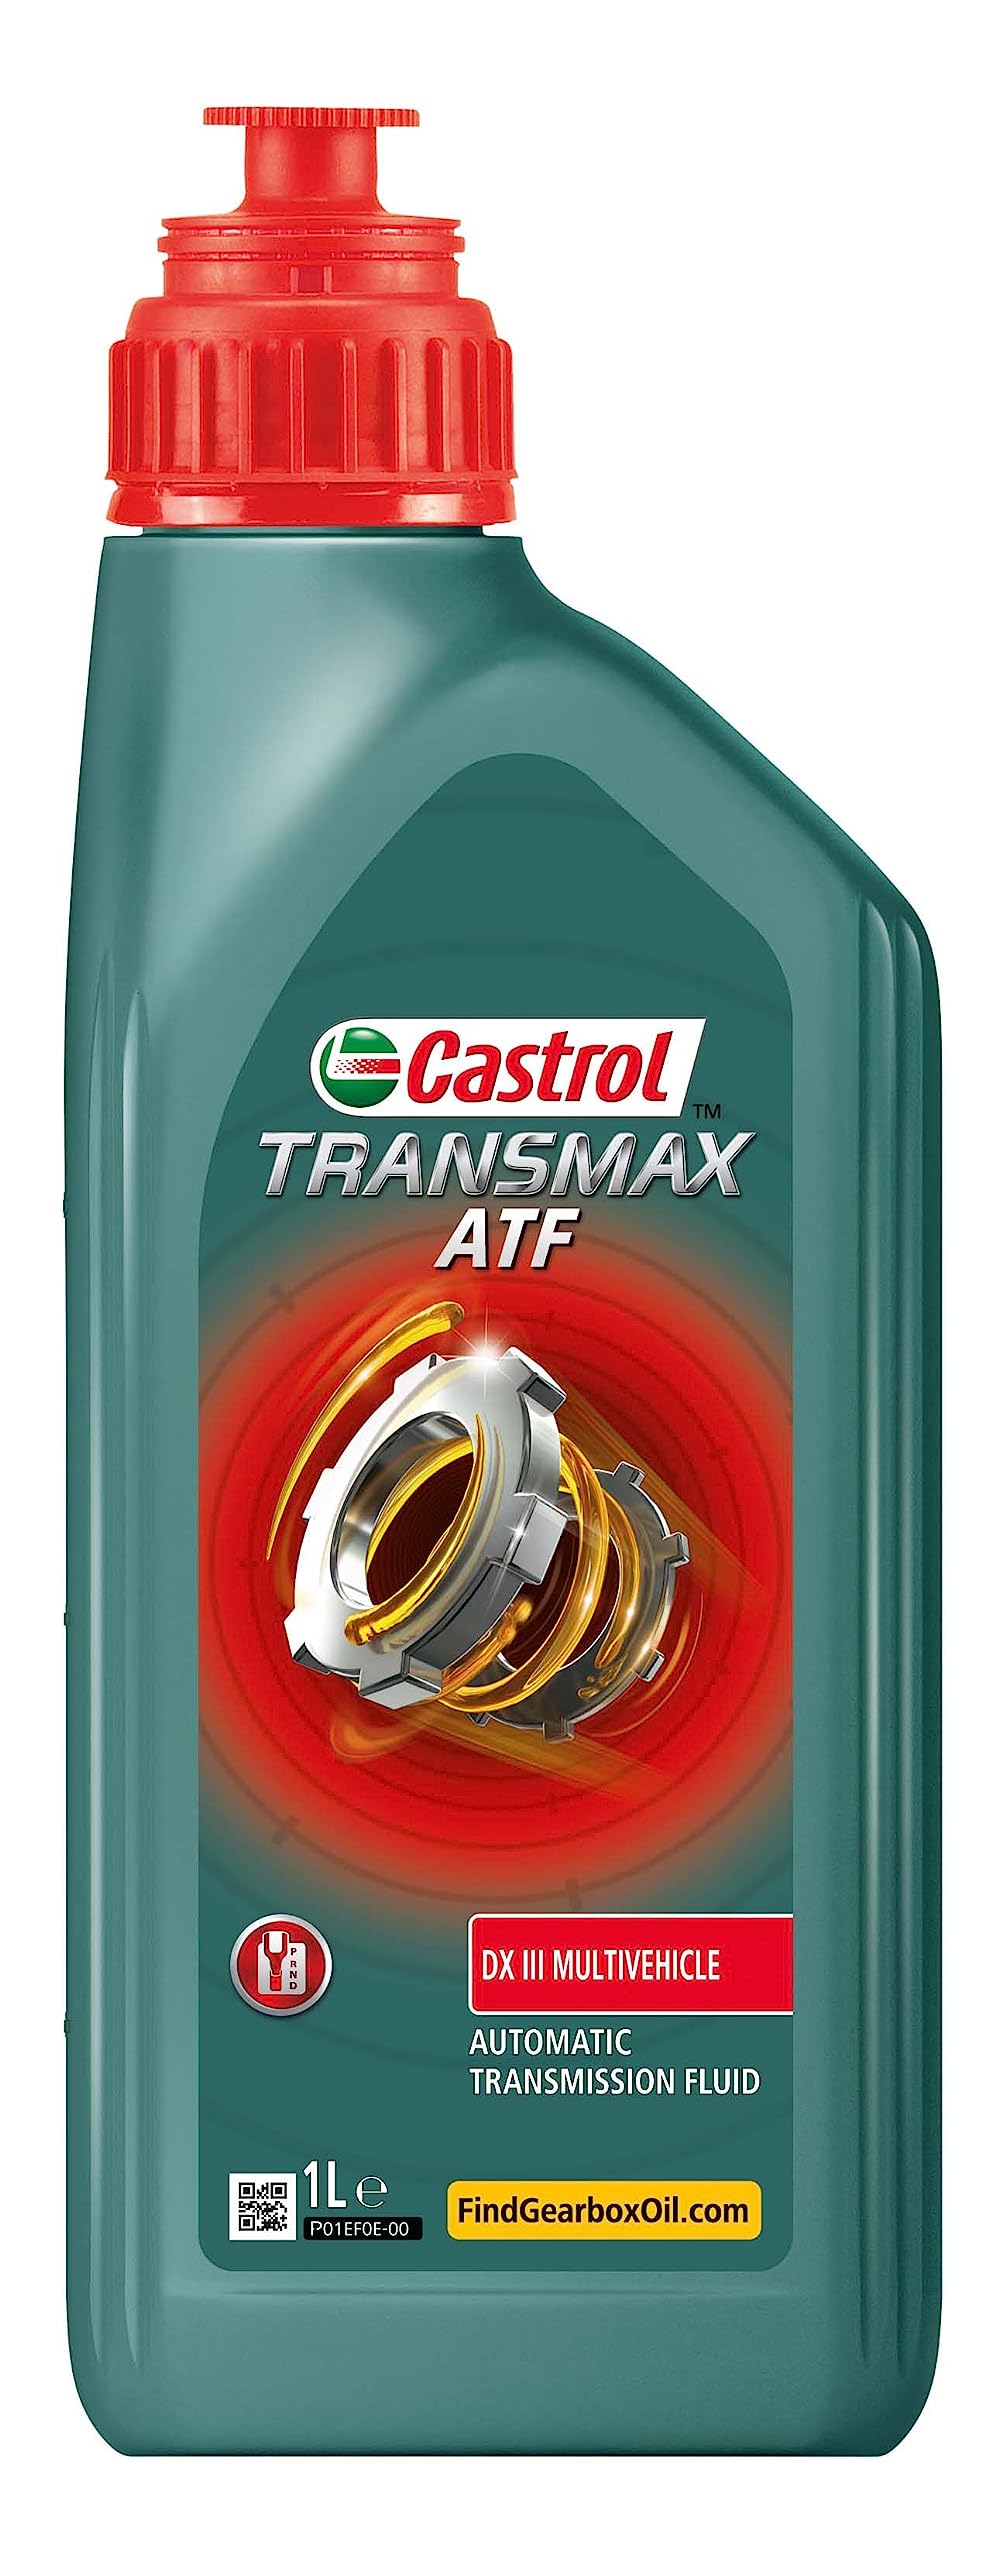 Castrol TRANSMAX ATF DX III Multivehicle Getriebeöl, 1L von Castrol